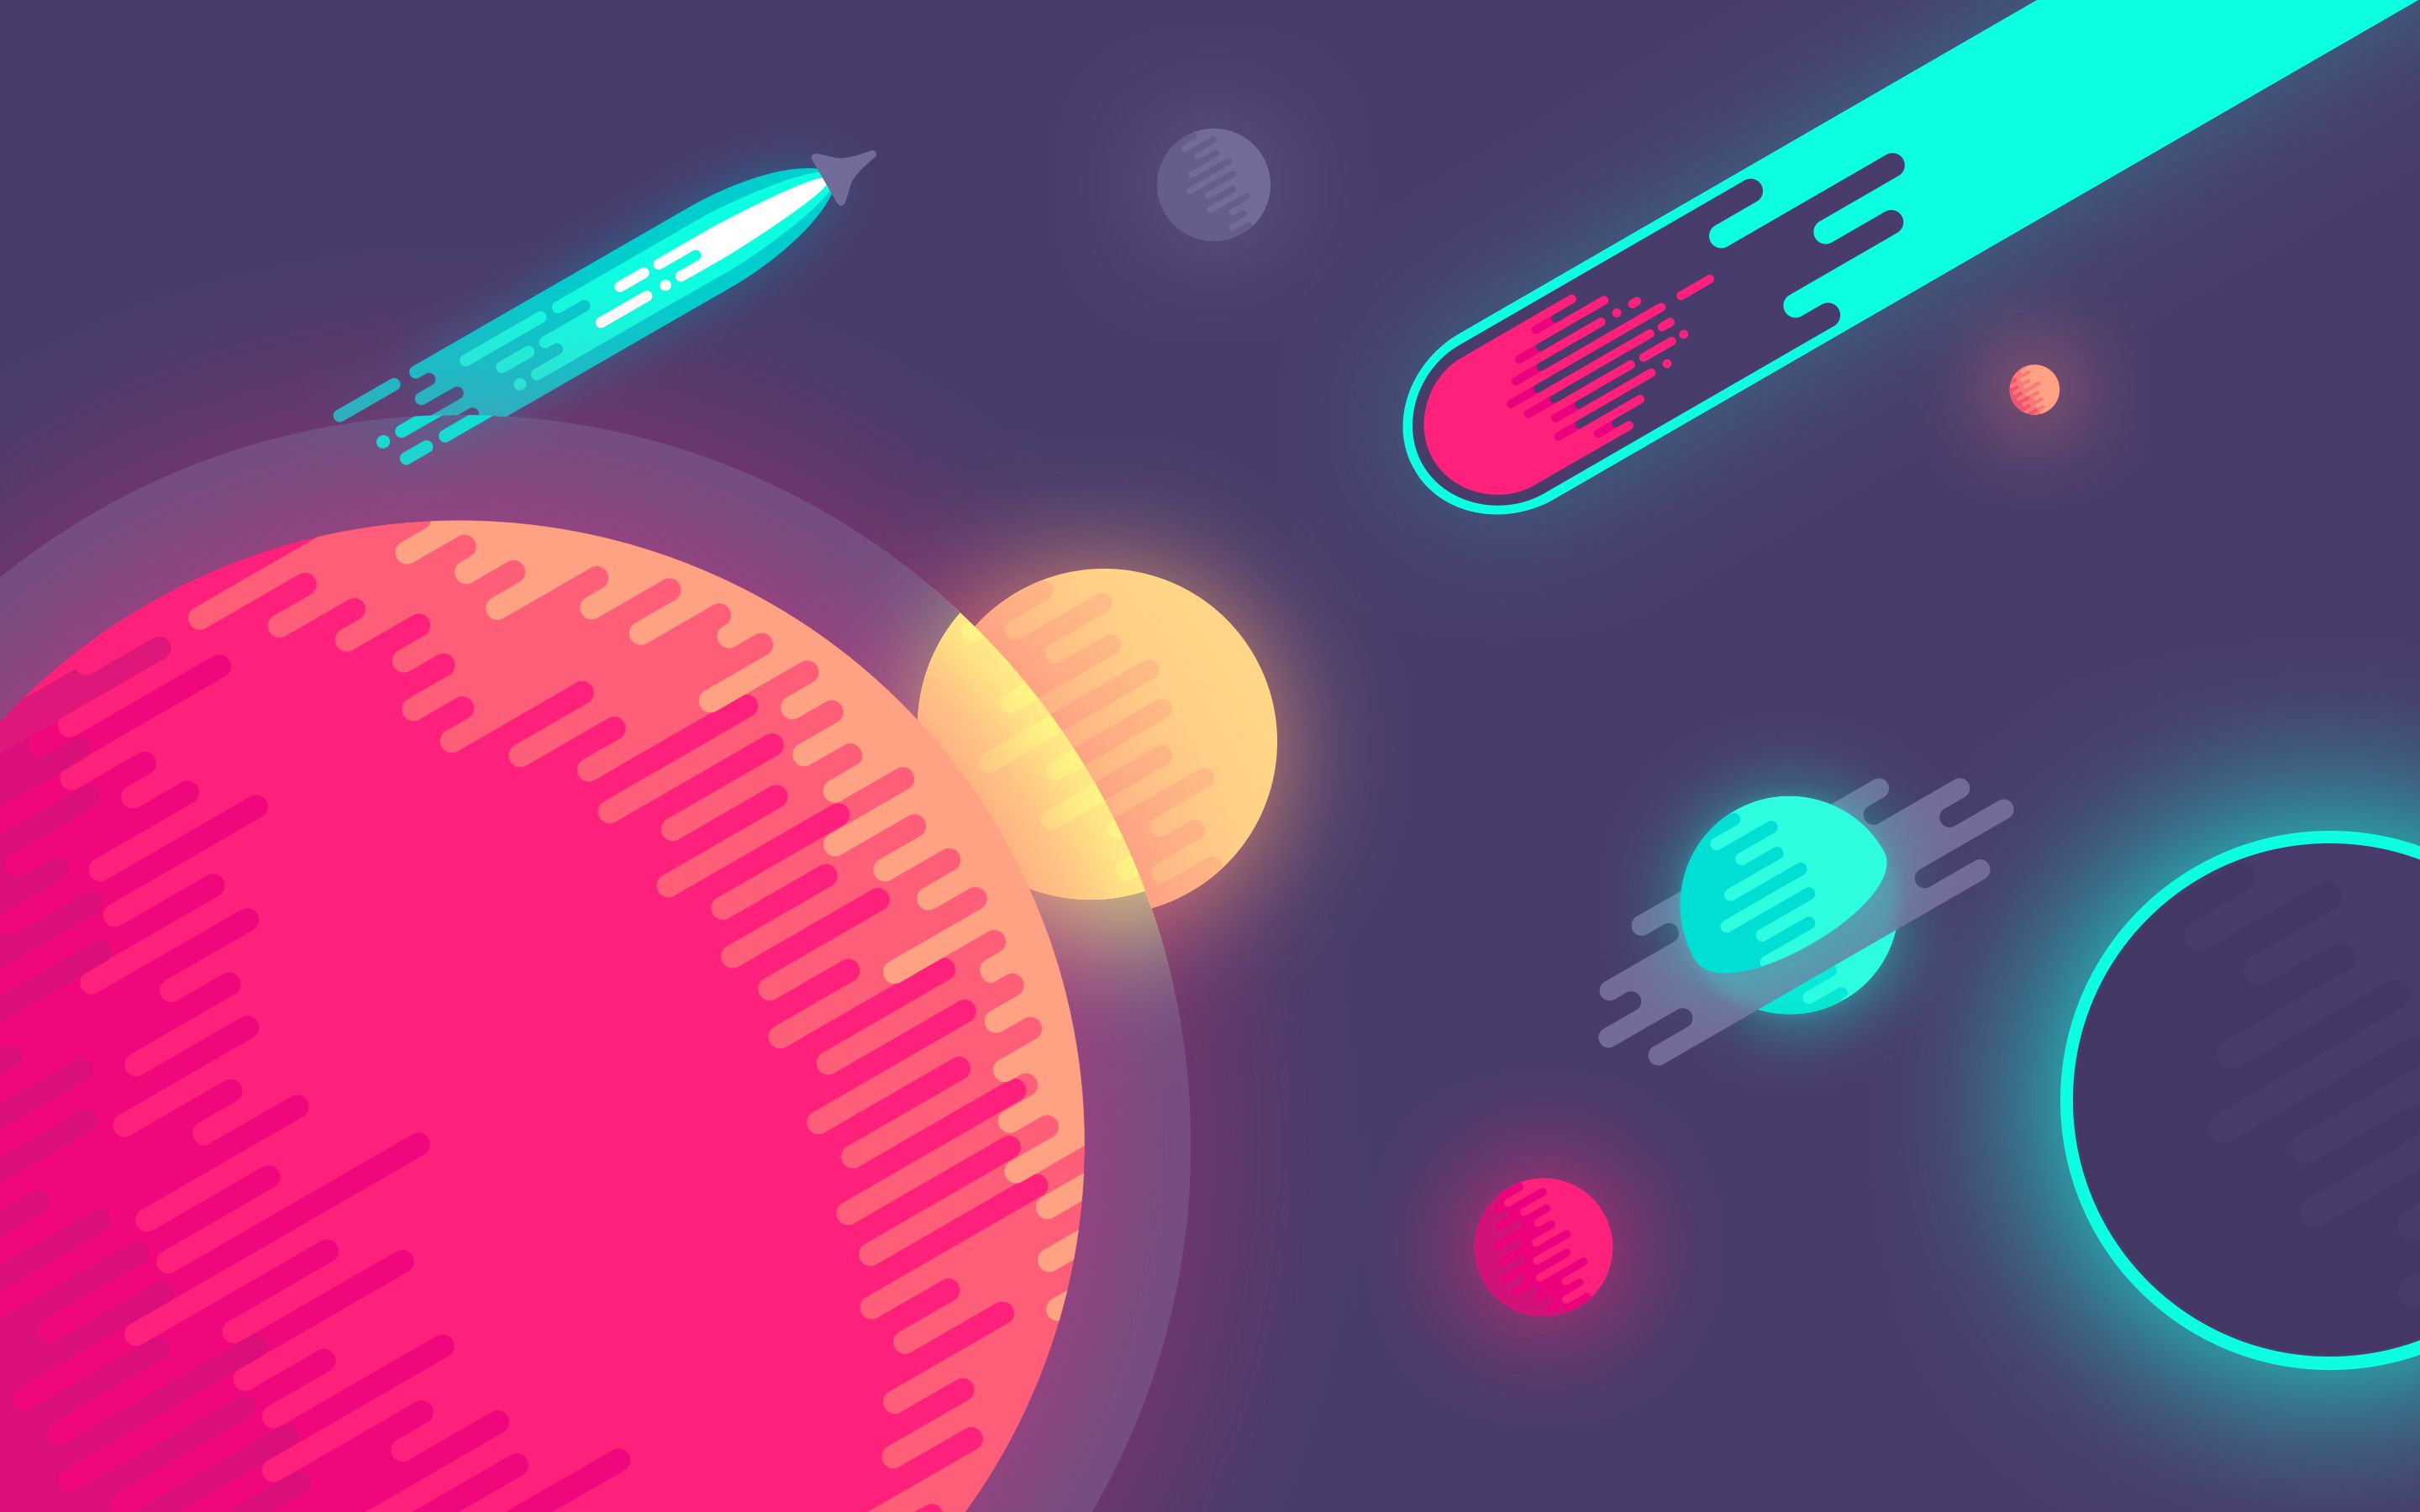 Space Ship Comet Neon Illustration Desktop Wallpaper